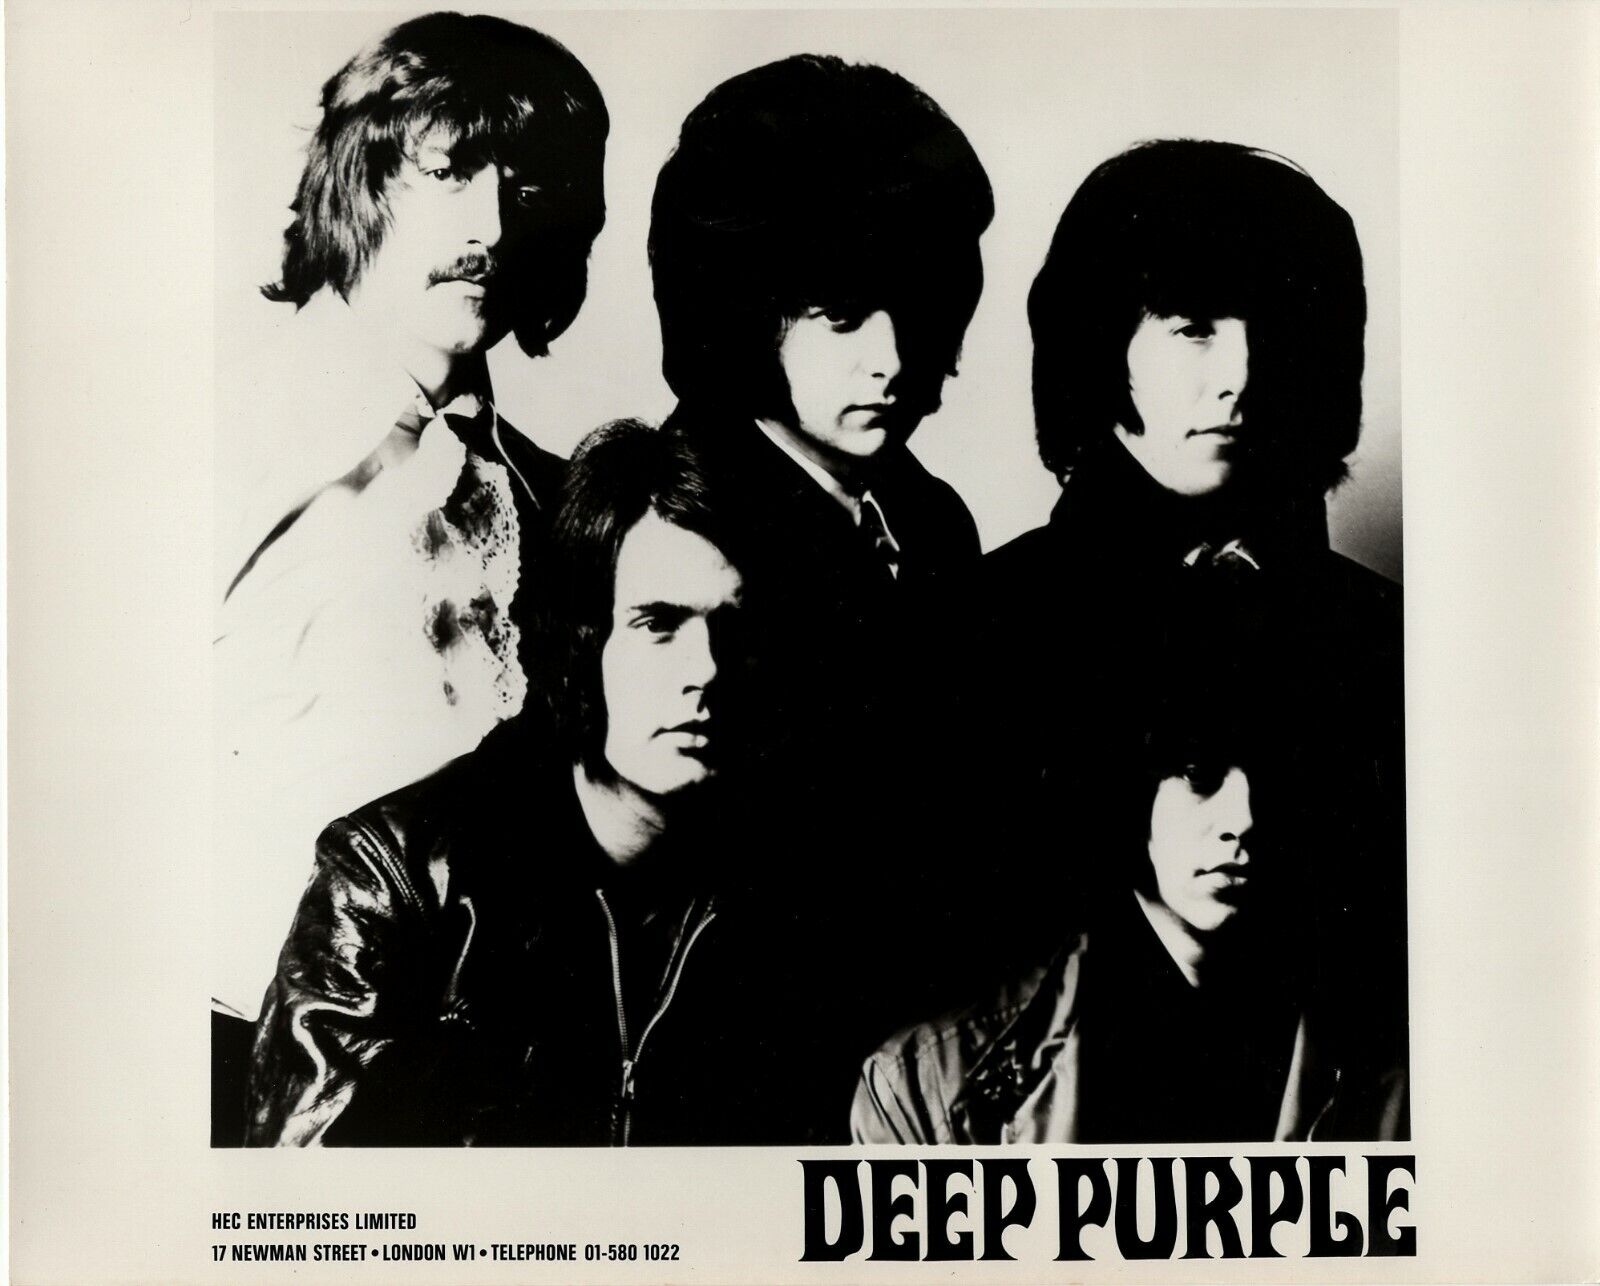 Deep Purple Photo Mark I Original HEC Enterprises Limited Promo 1968